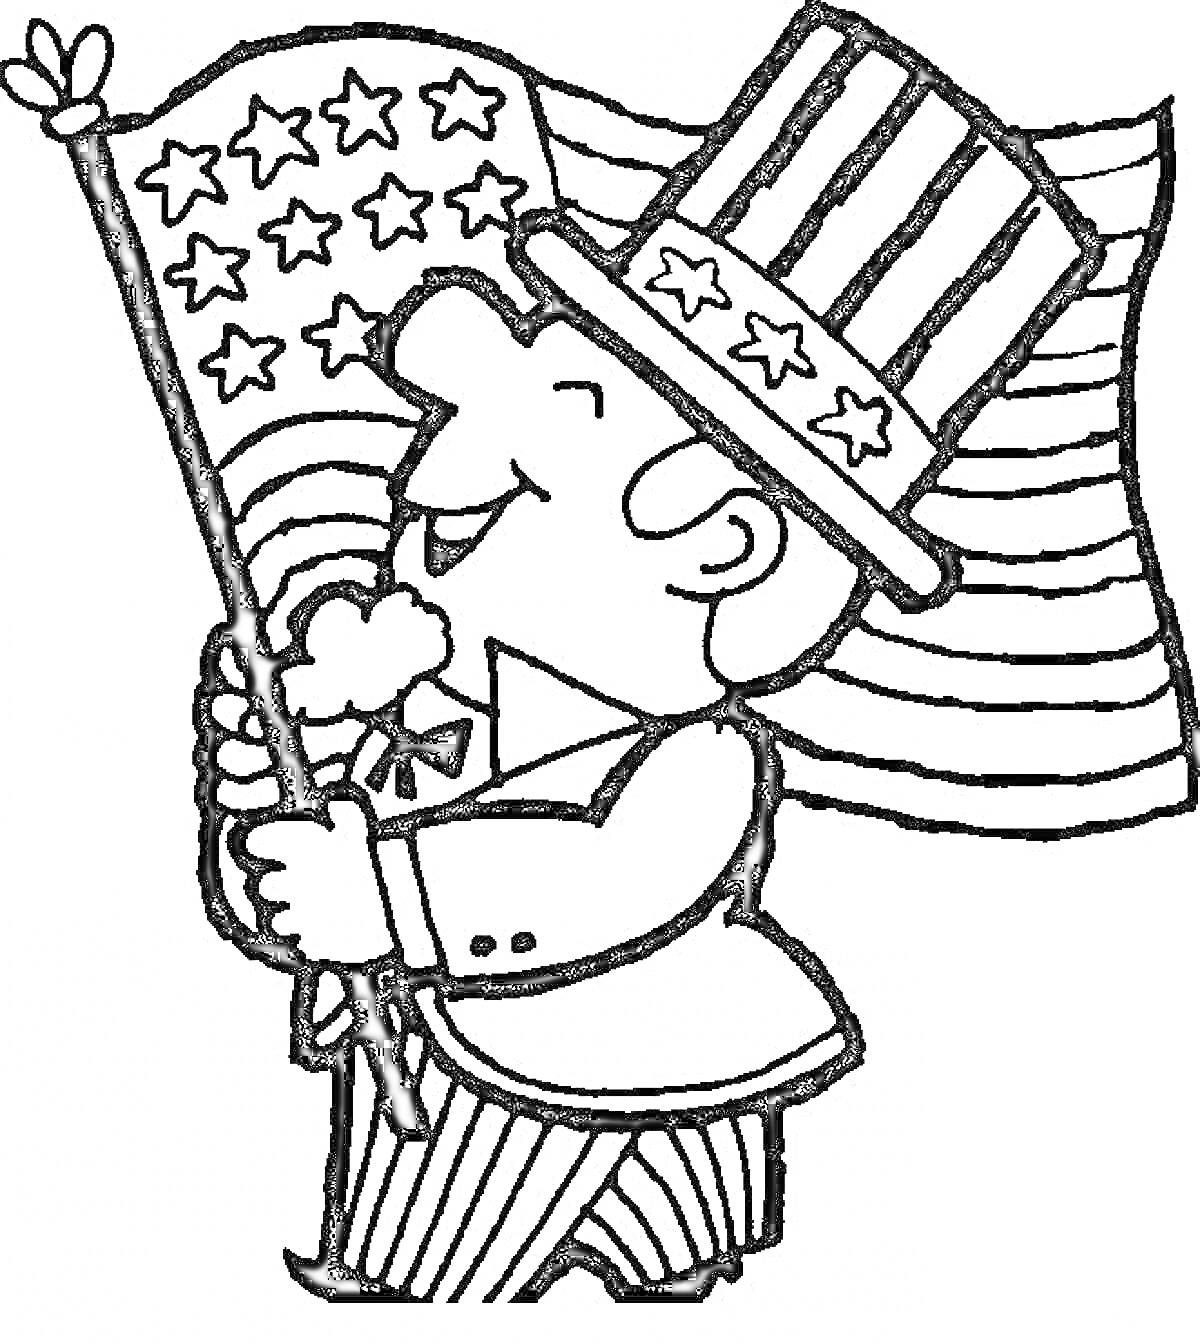 Человек с флагом США и в шляпе Uncle Sam